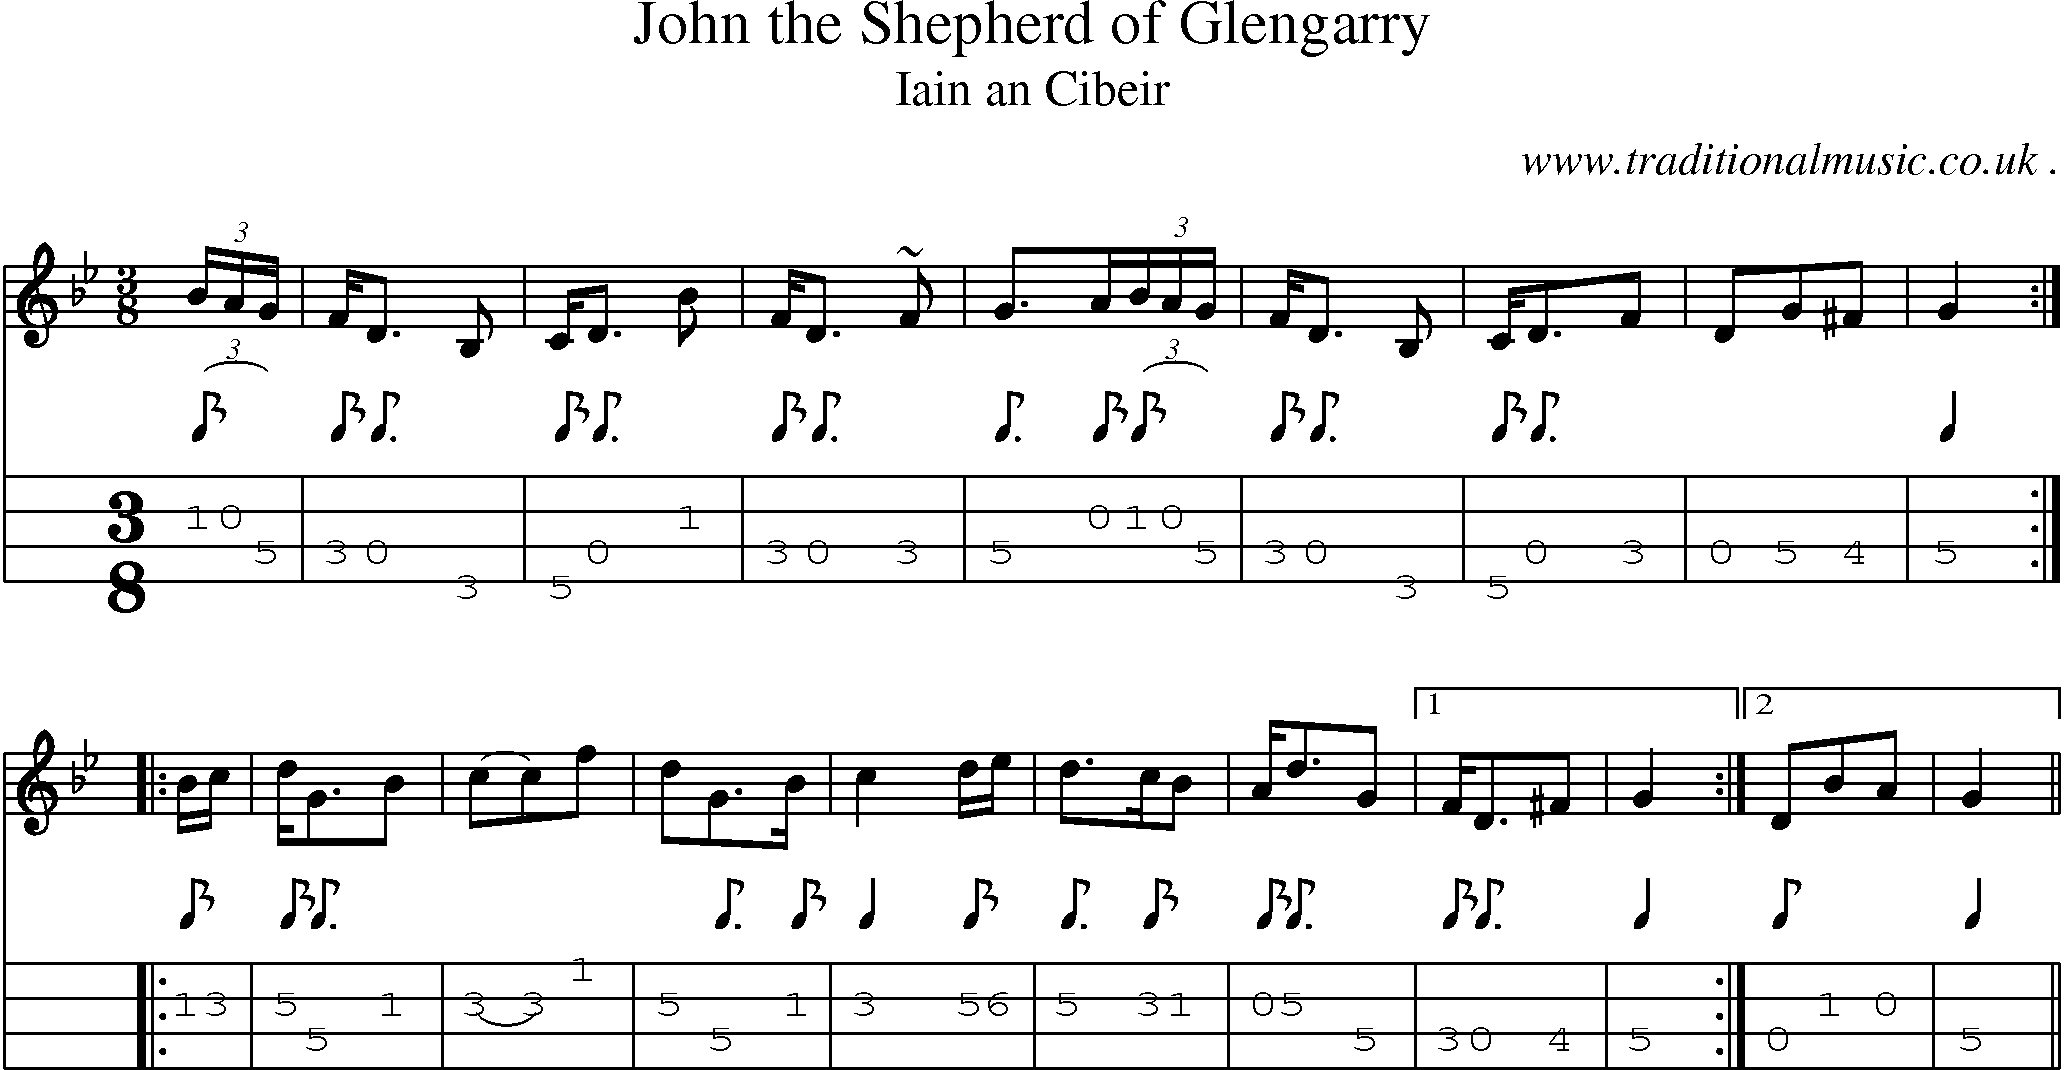 Sheet-music  score, Chords and Mandolin Tabs for John The Shepherd Of Glengarry